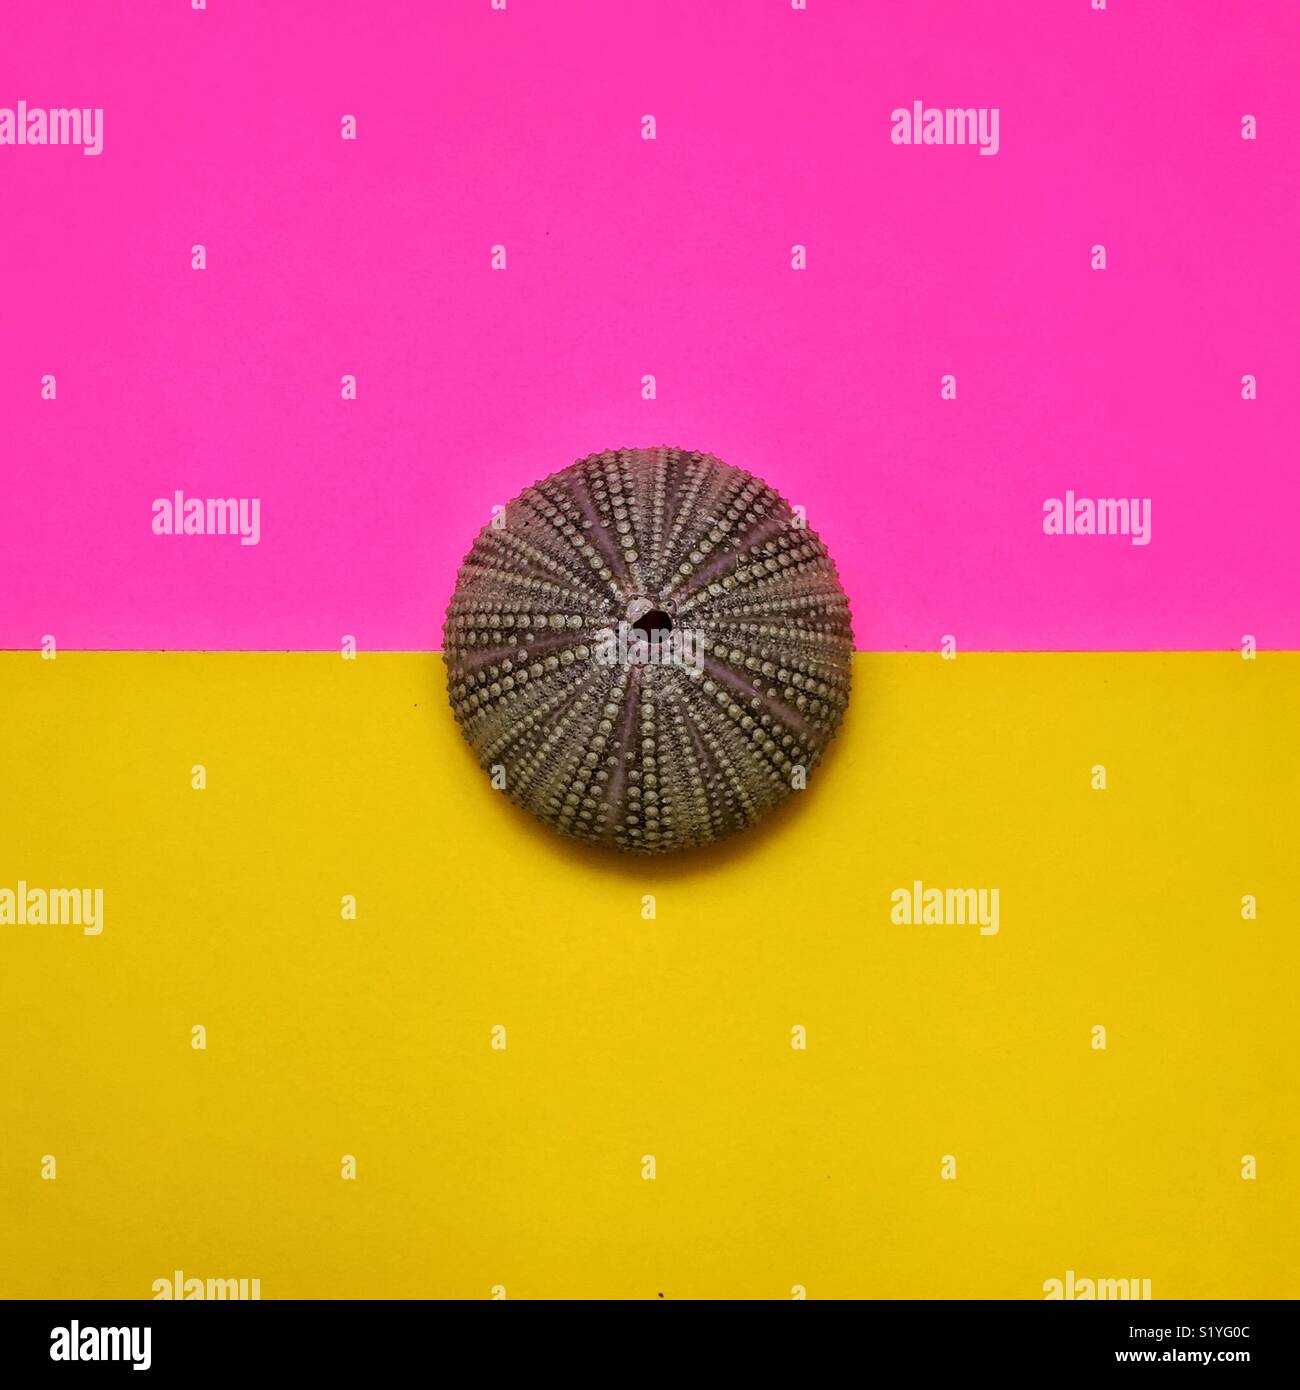 Sea urchin shell on duotone pink and yellow background Stock Photo